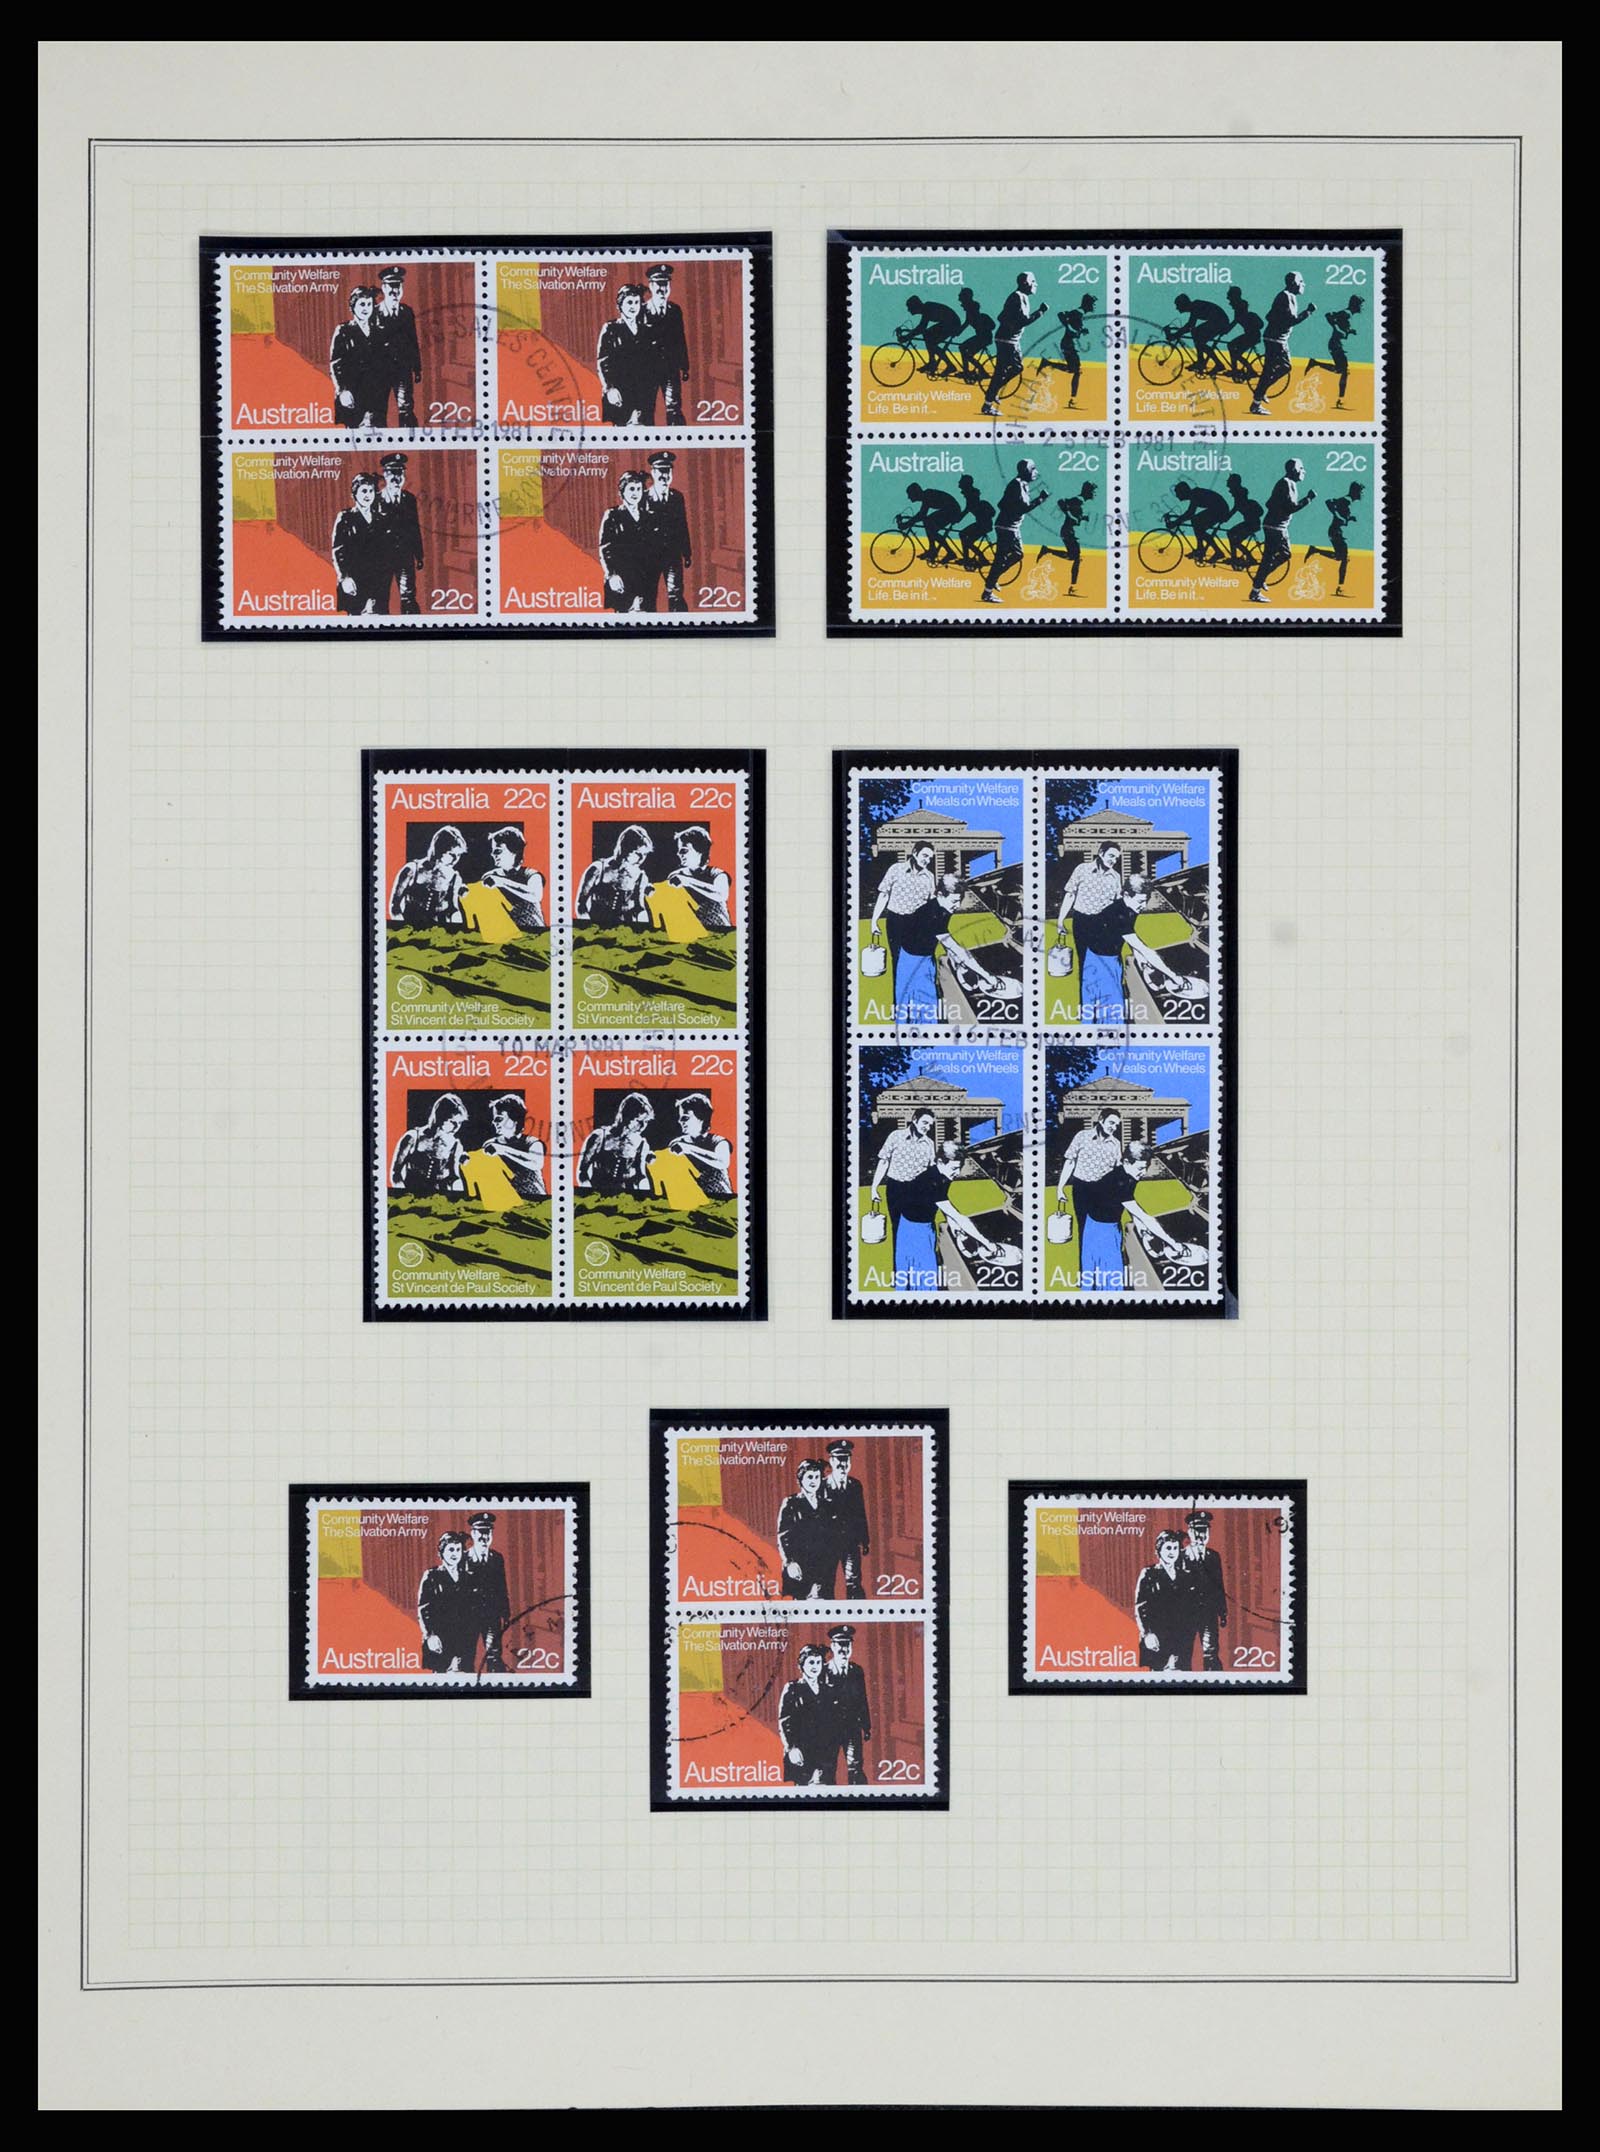 37049 063 - Stamp collection 37049 Australia 1913-1990.